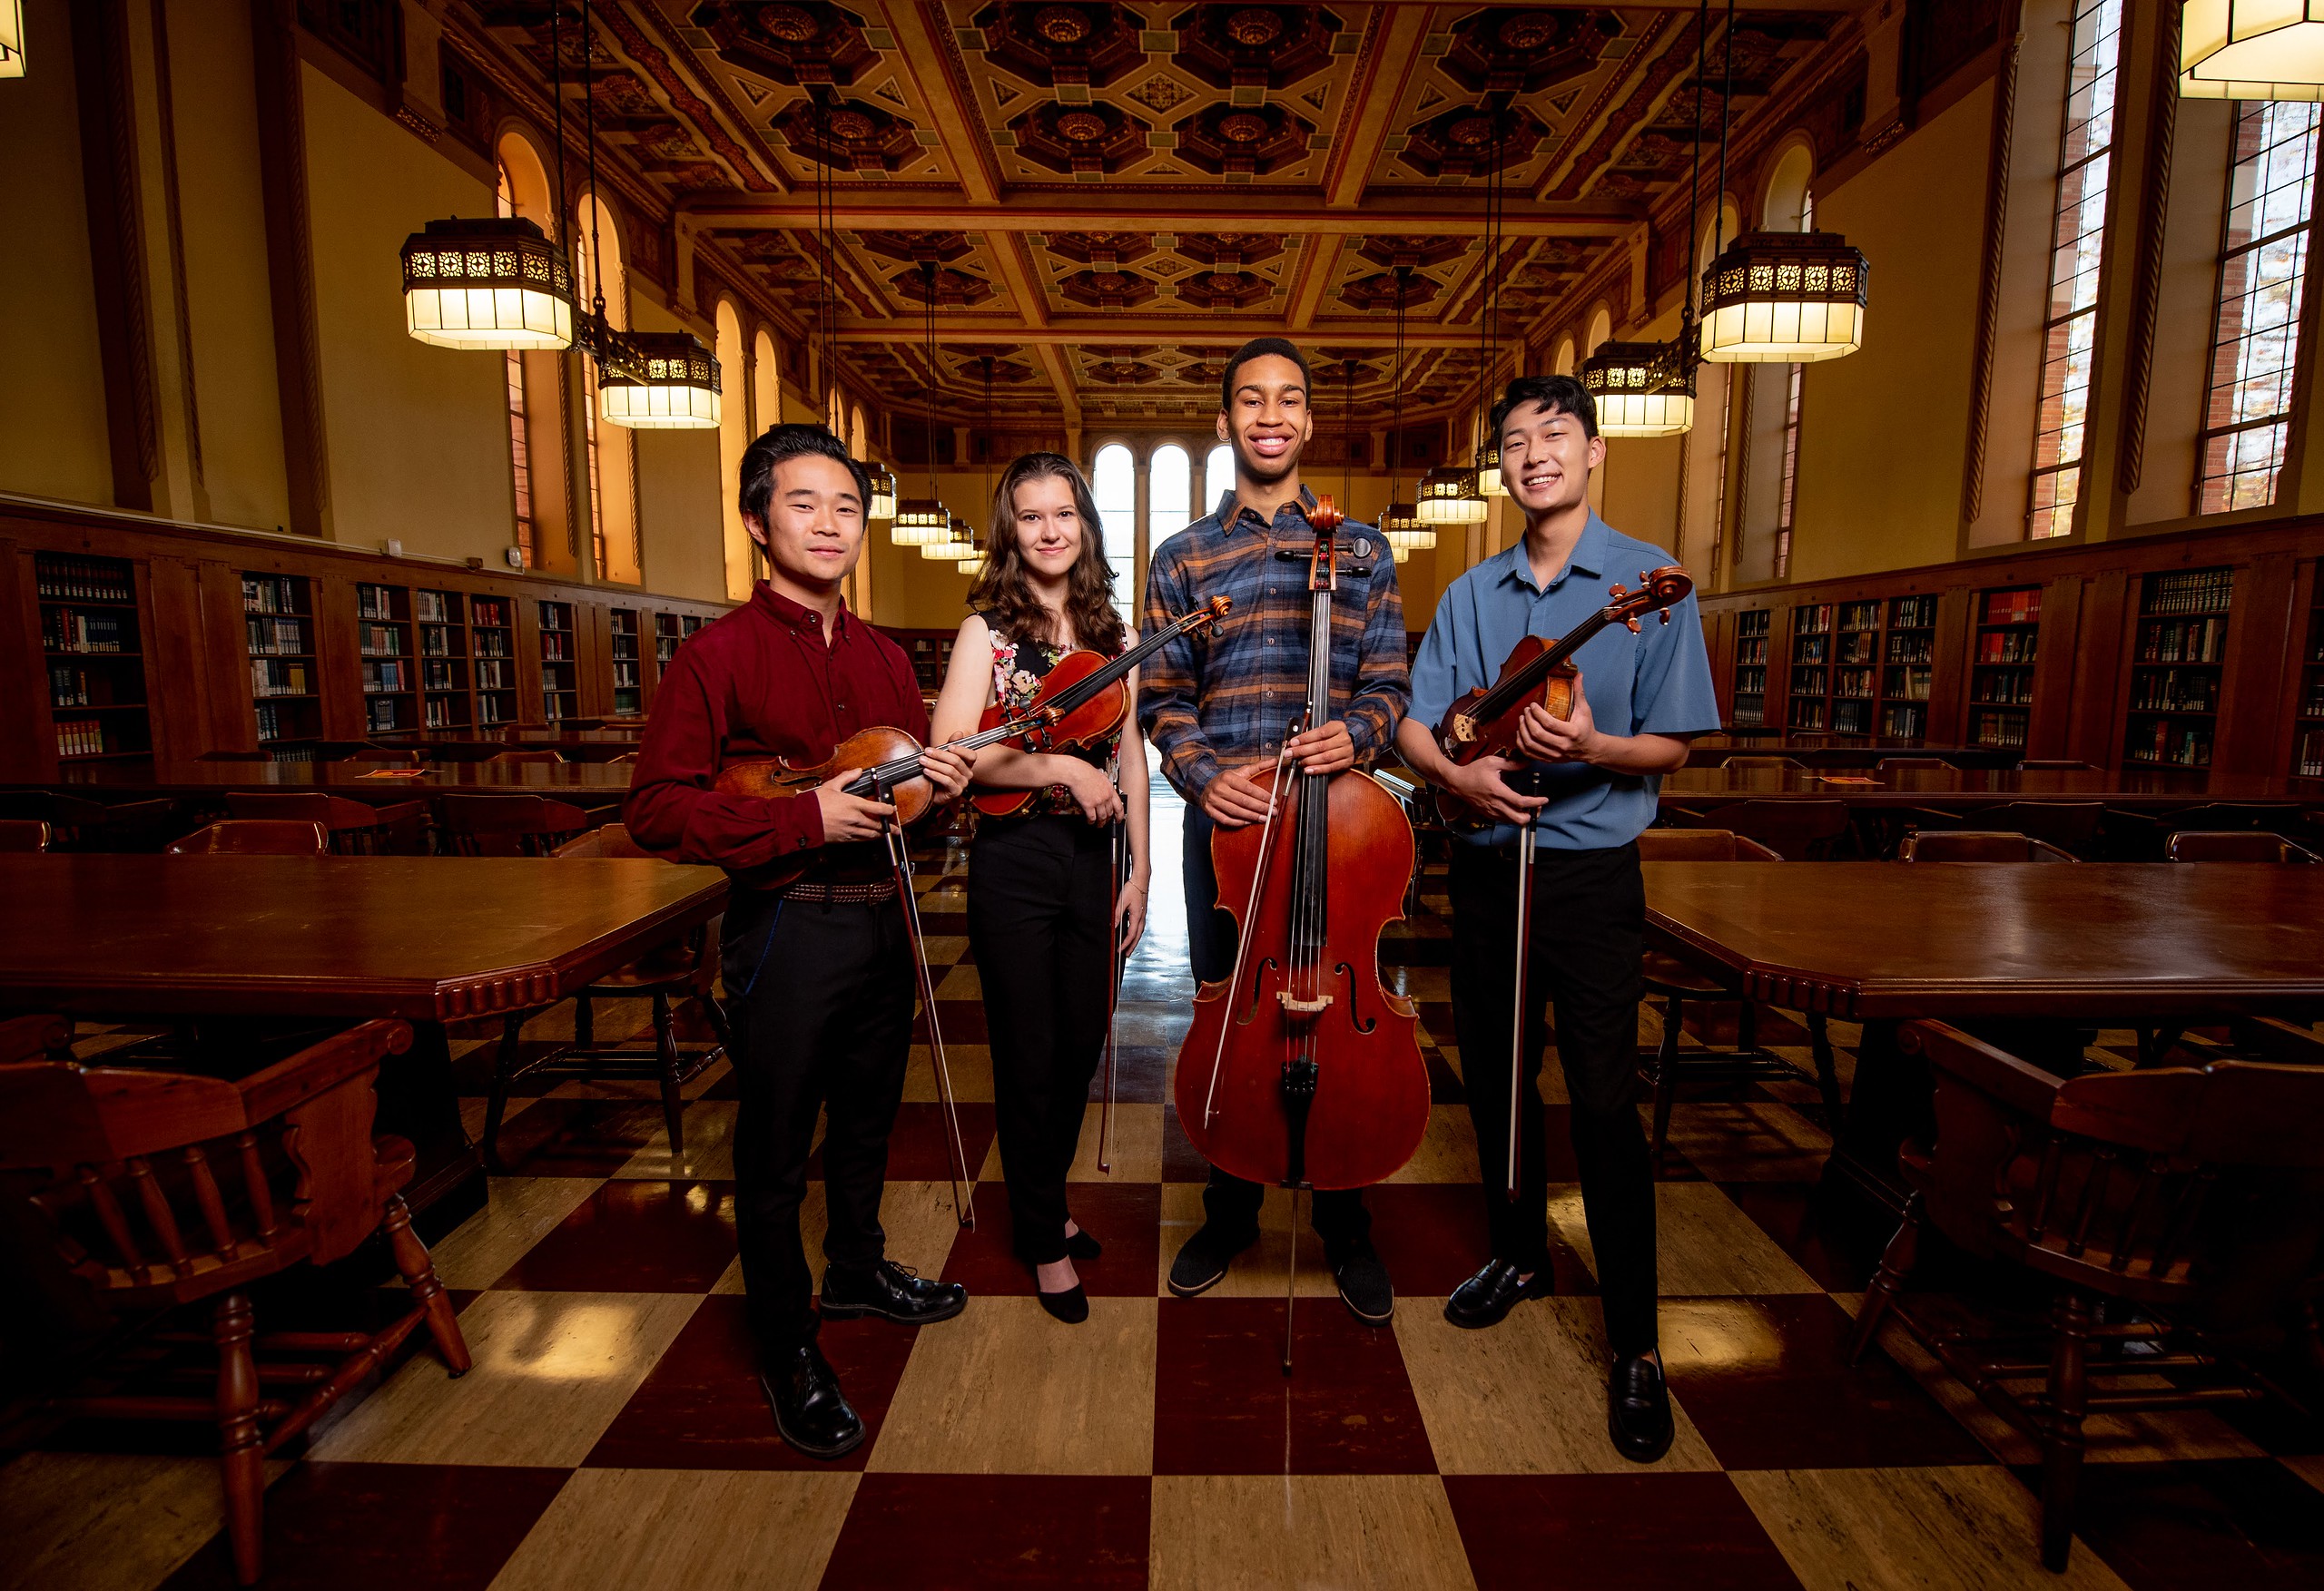 String quartet in Doheney Library.